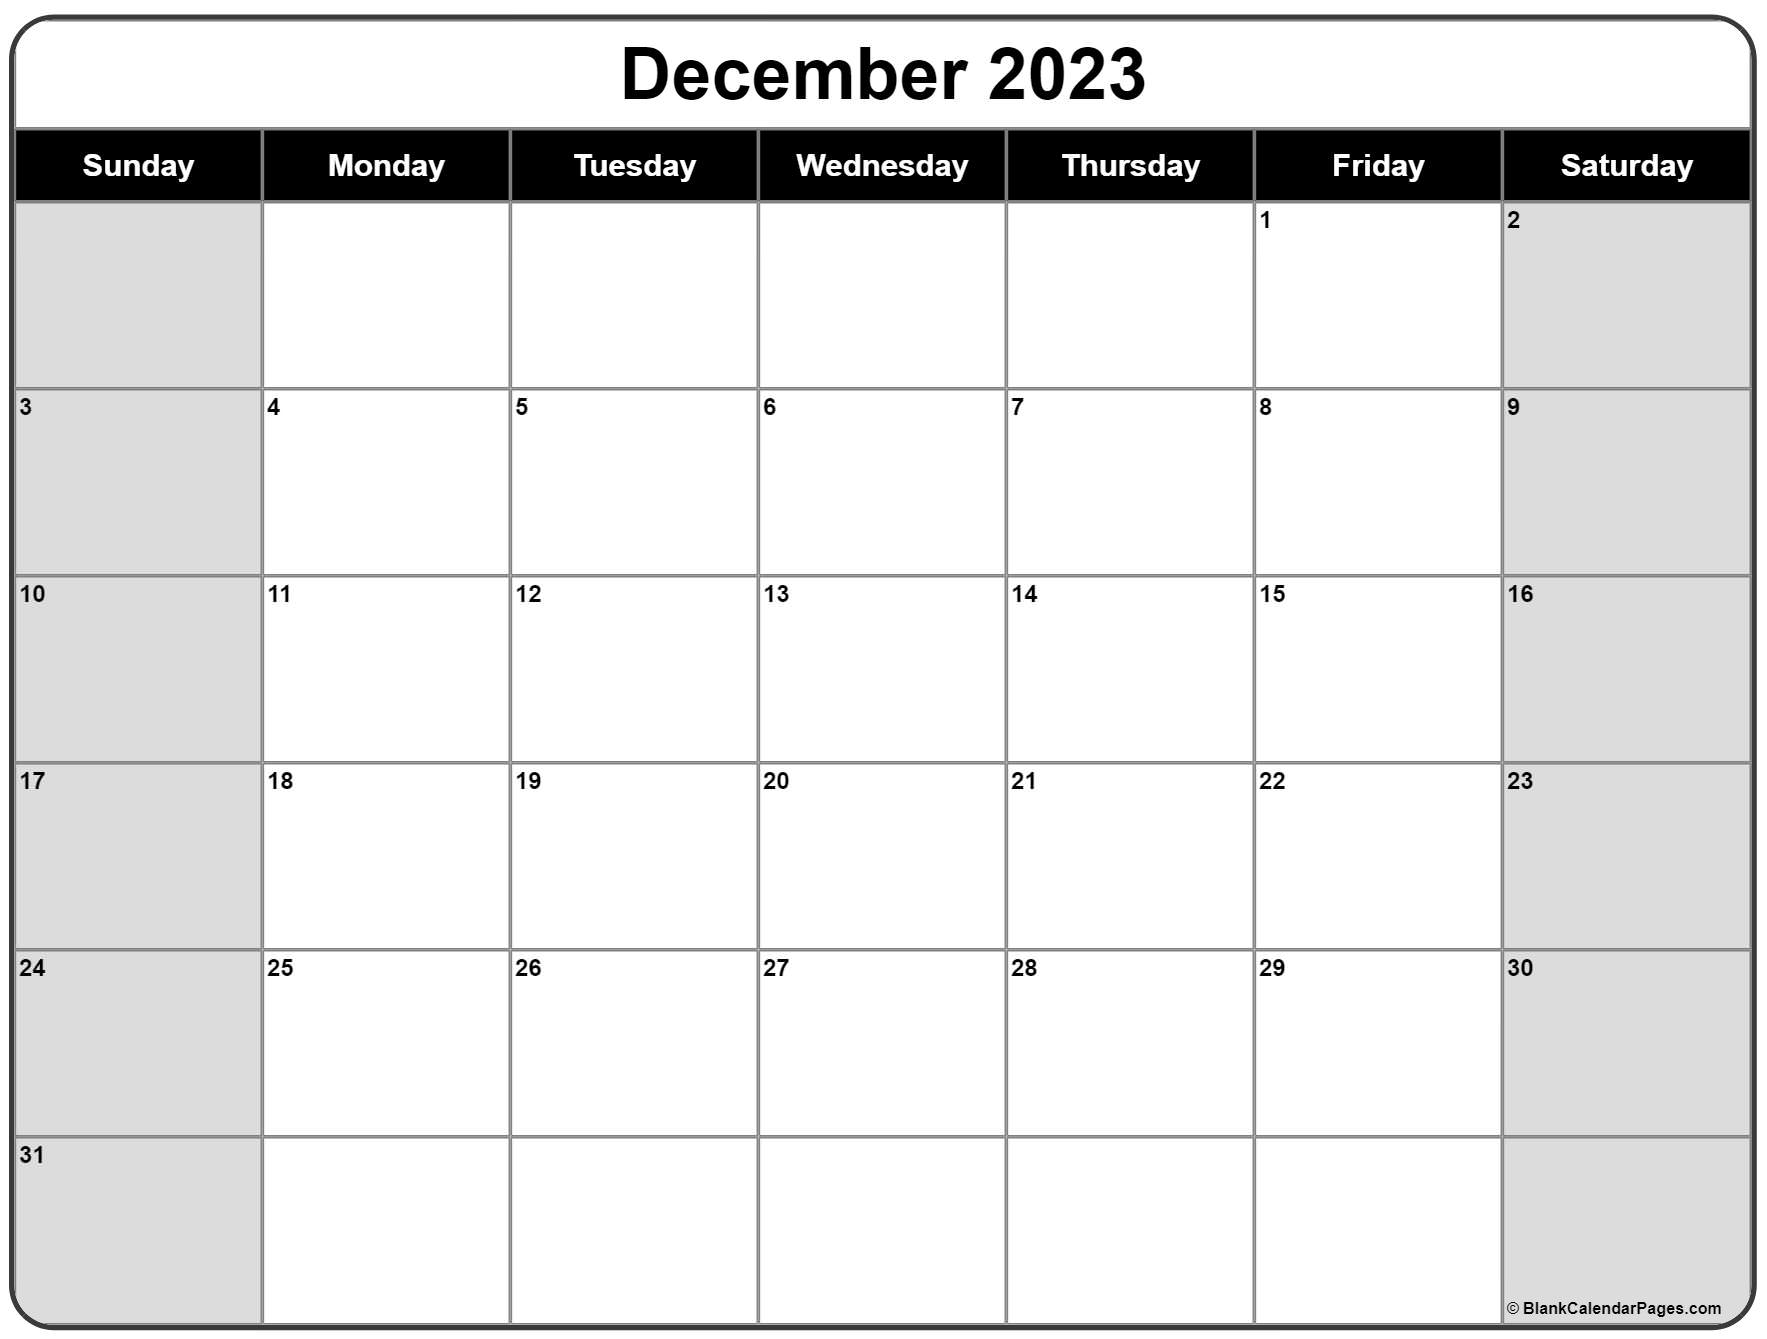 December 2023 calendar | free printable calendar